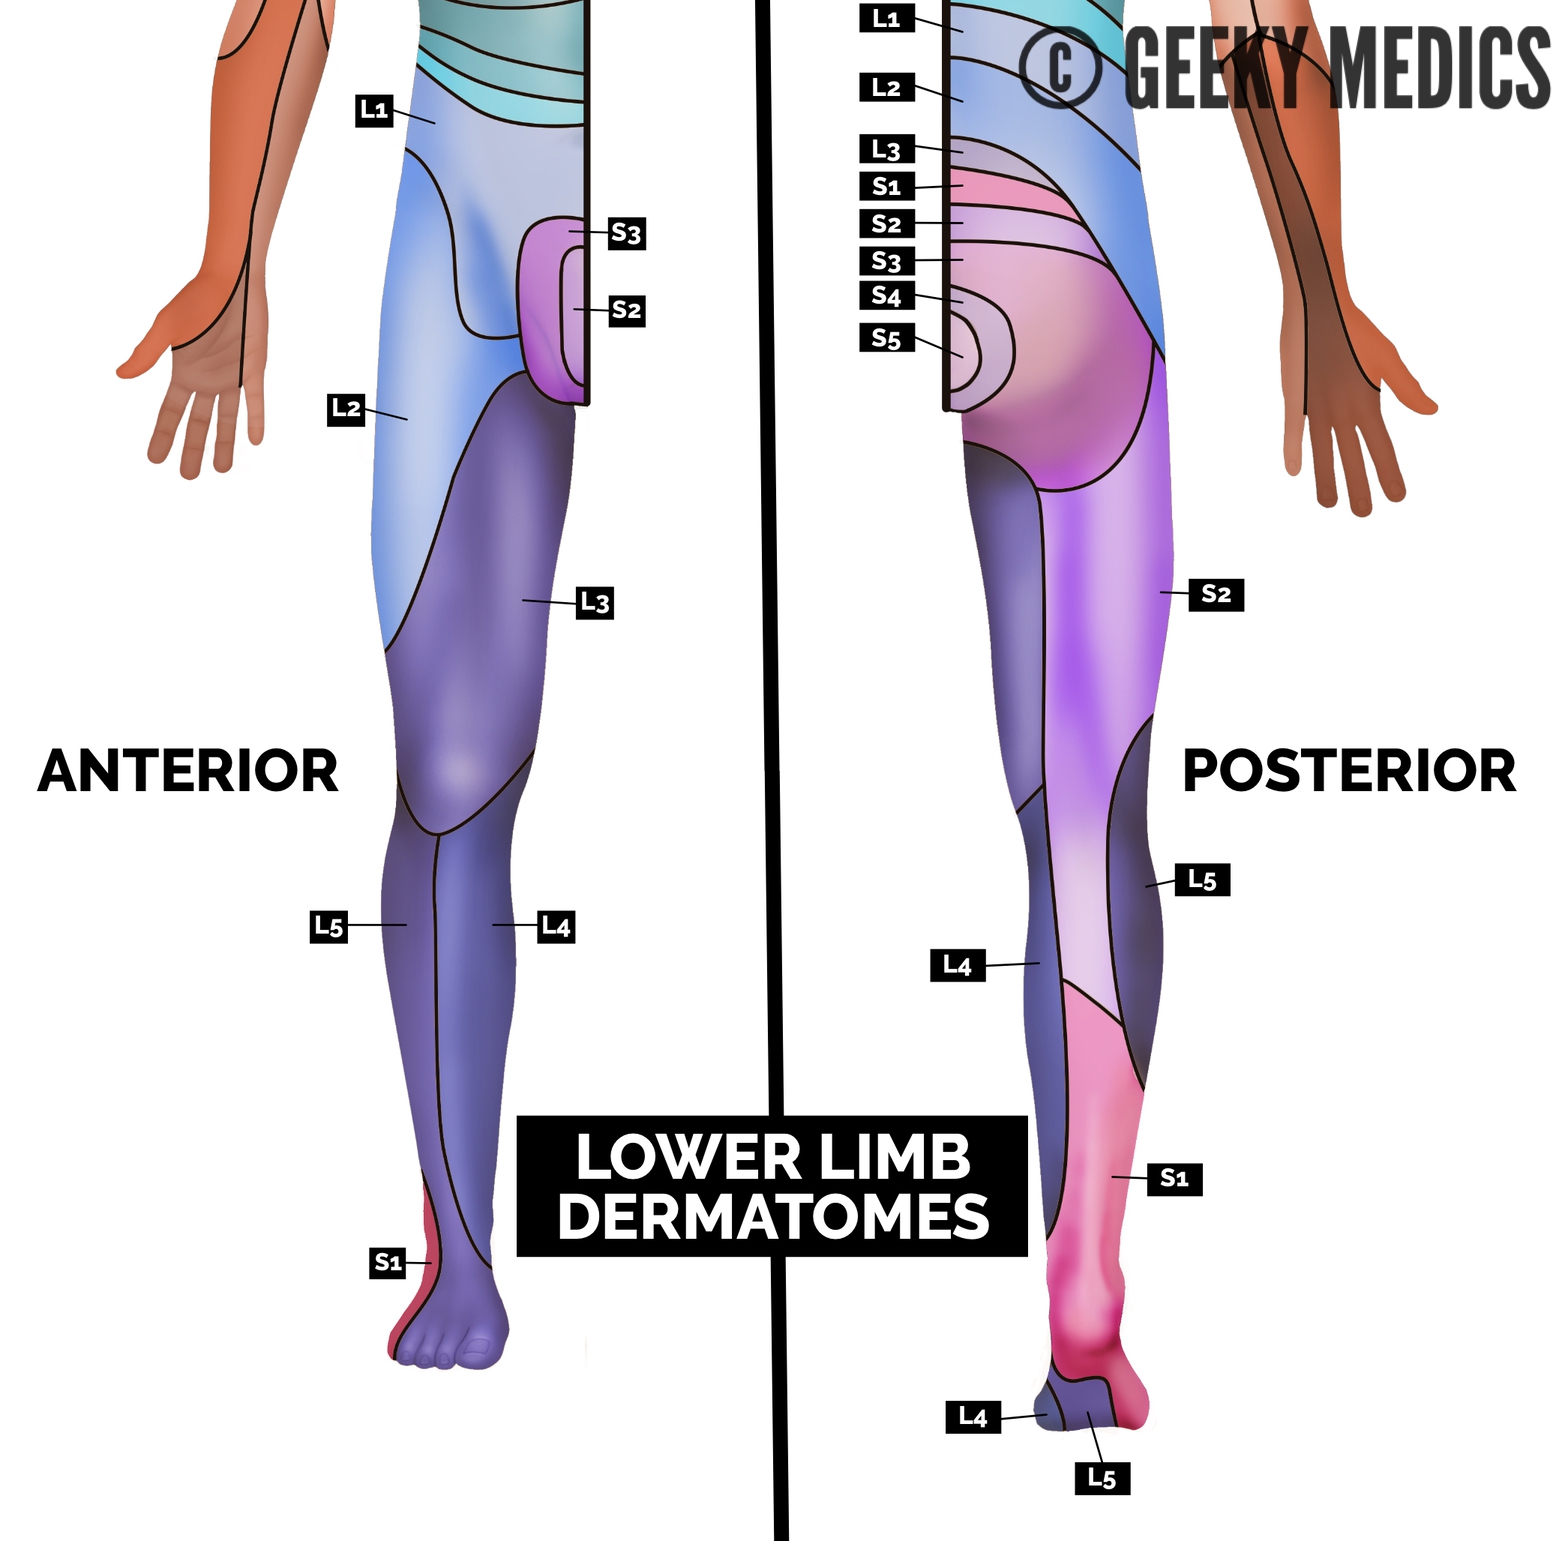 Lower limb dermatomes.